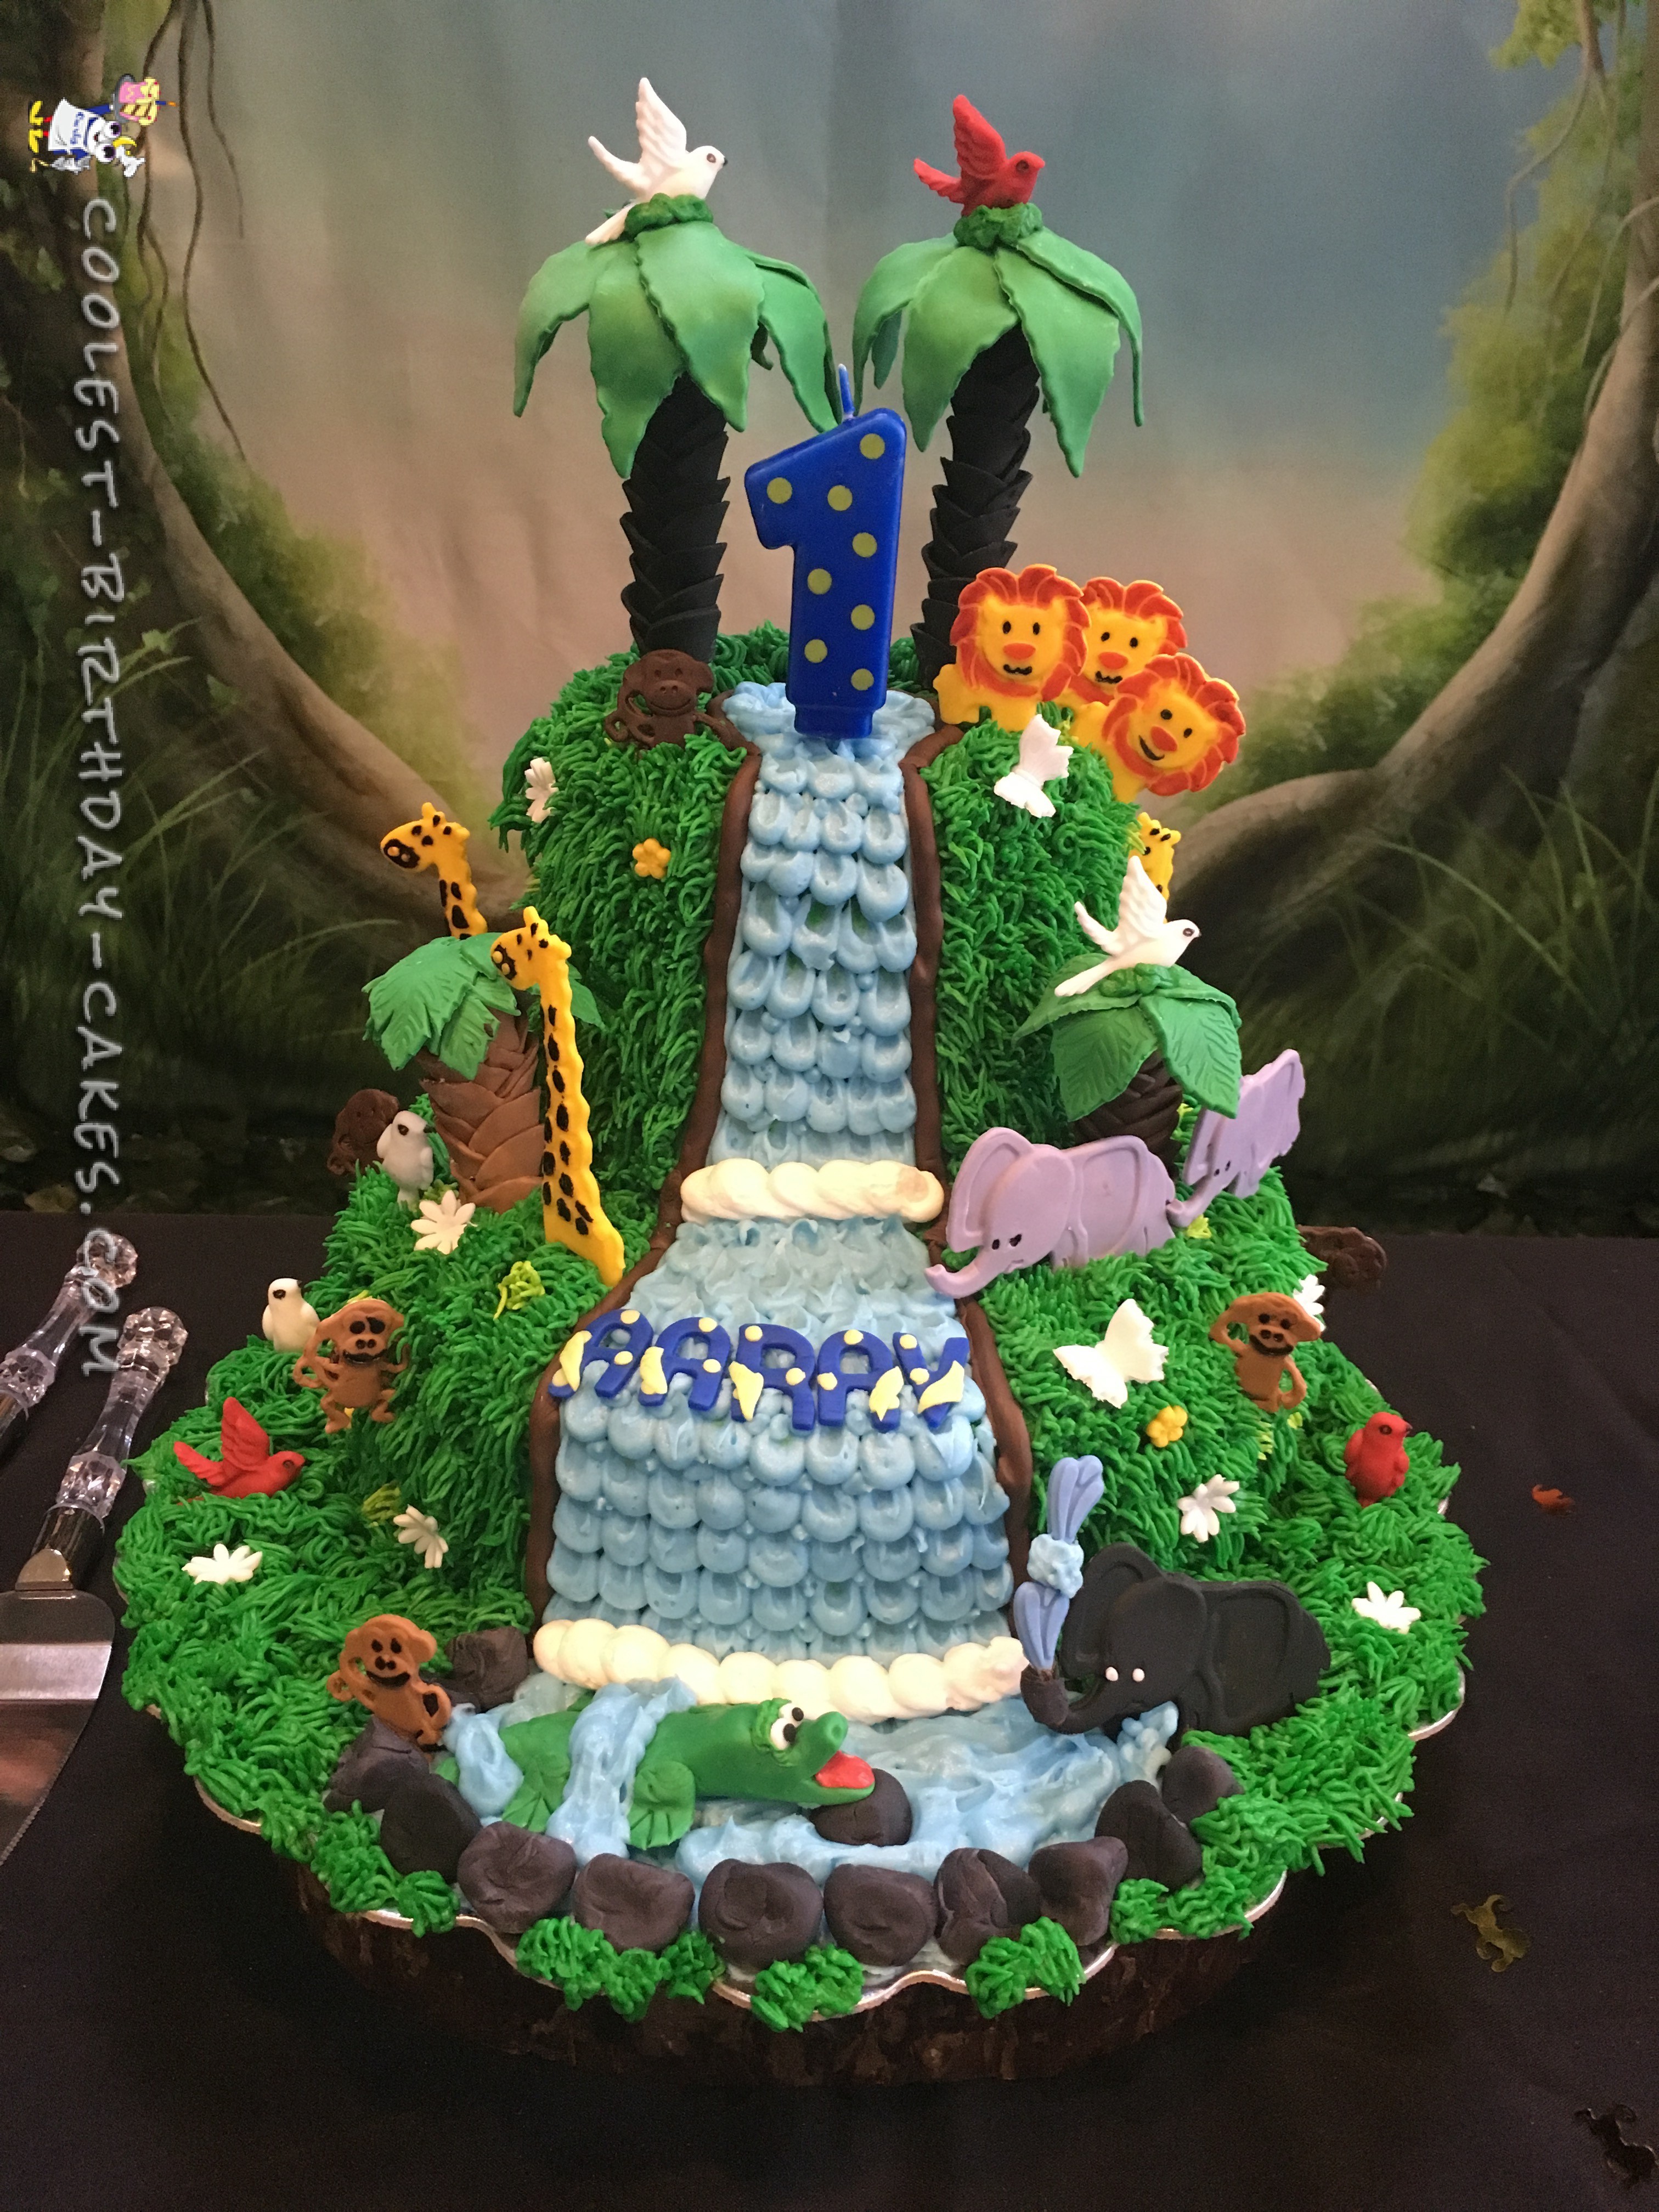 Amazing Homemade Jungle Cake with a